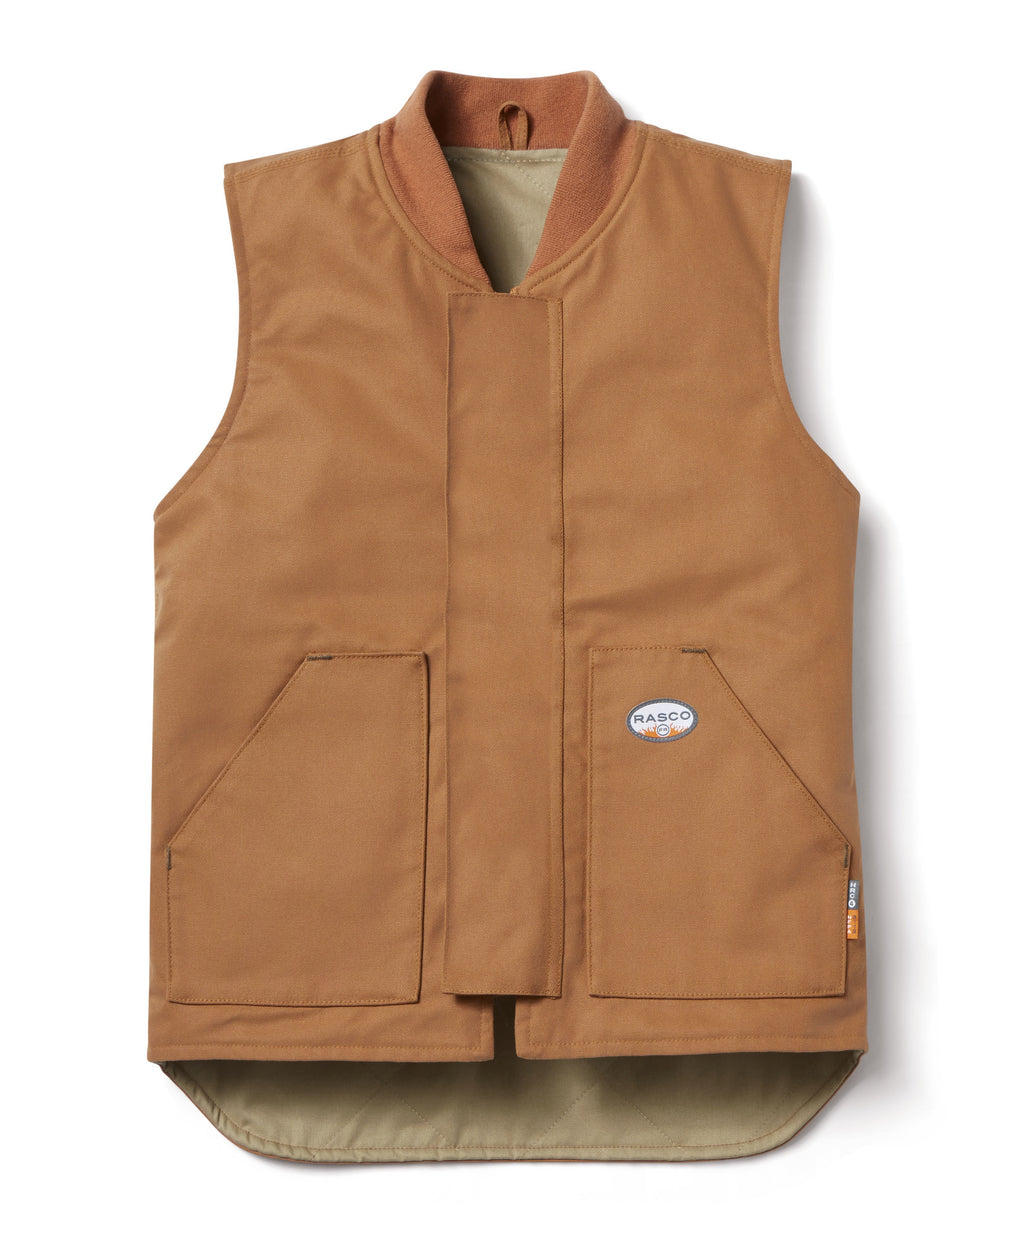 **Rasco FR Work Vest in Brown